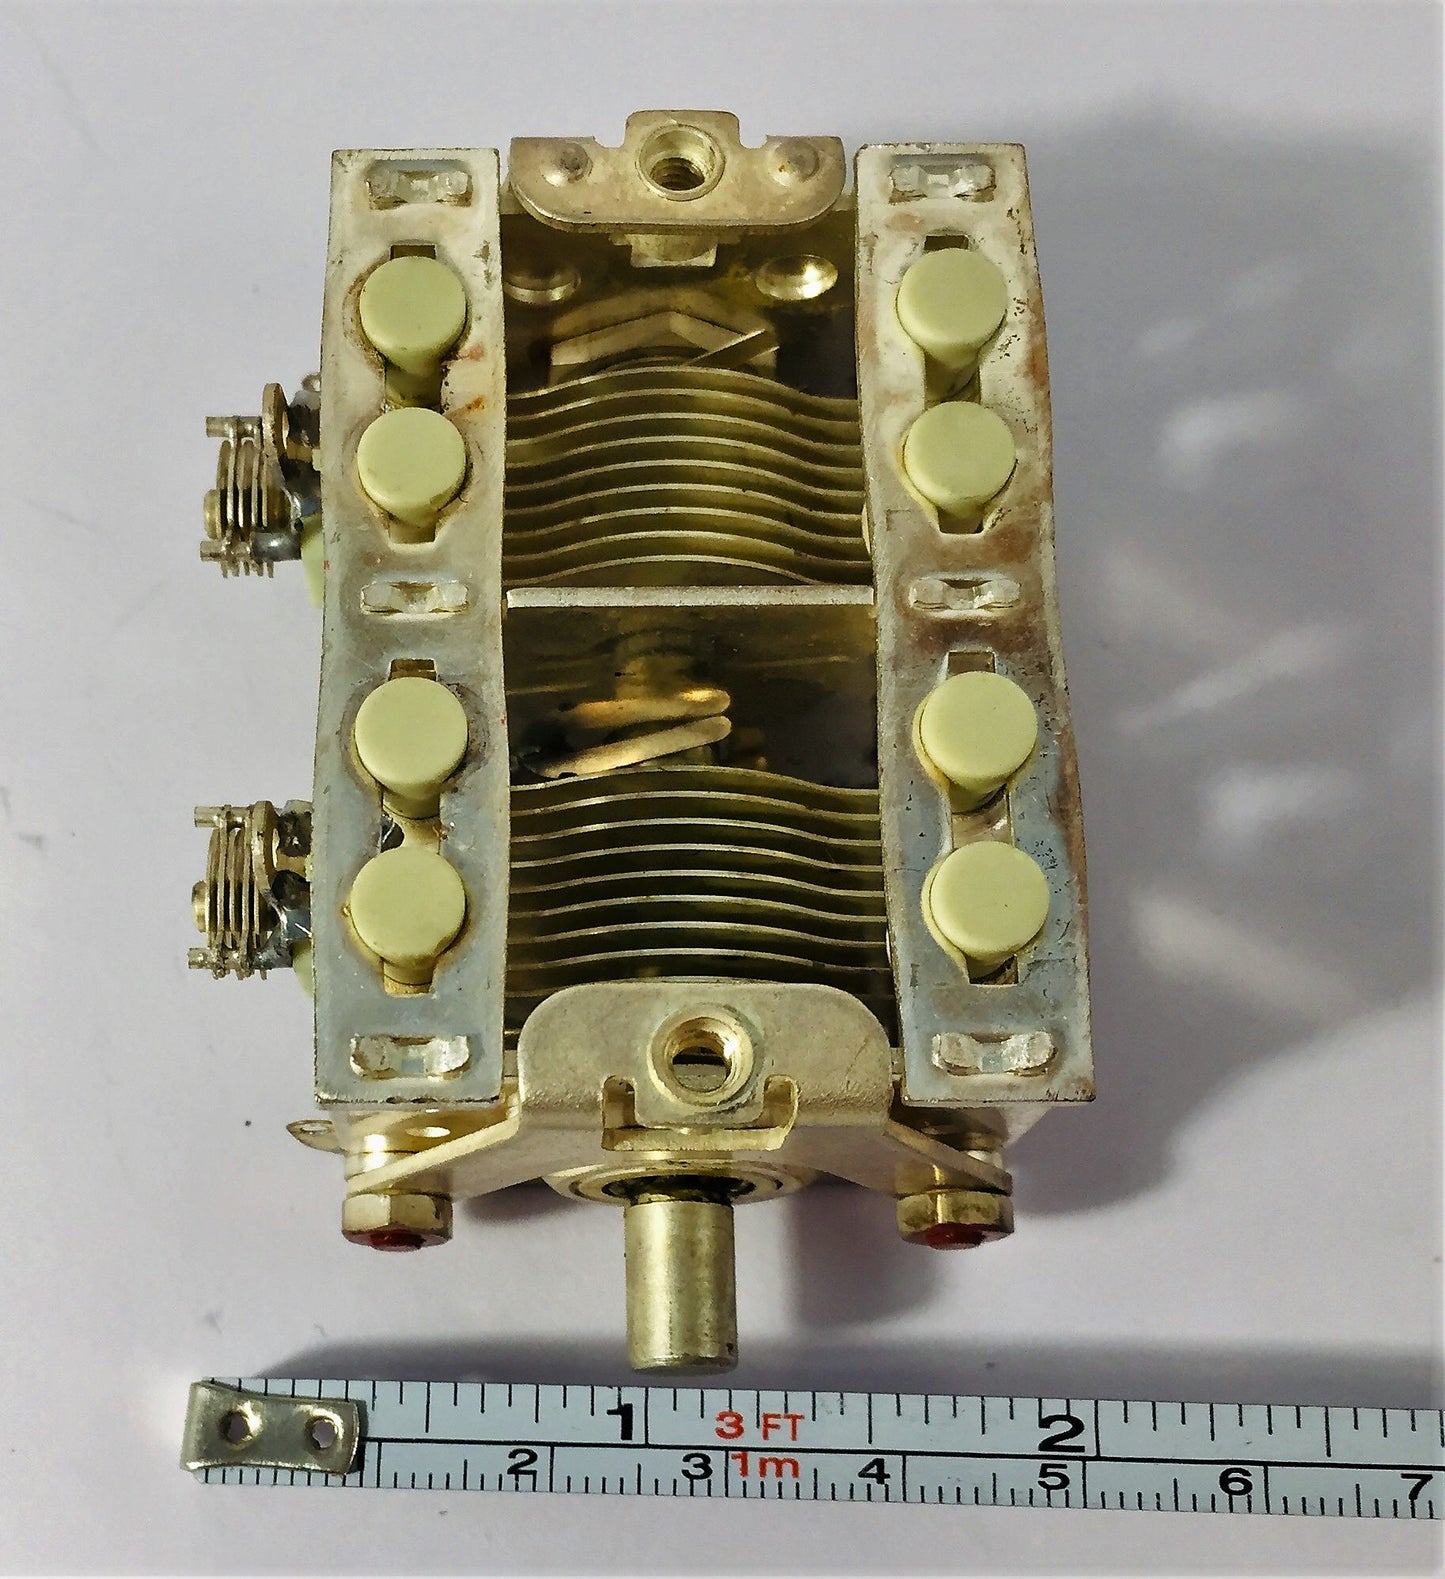 Clansman C41 Jacksons air spaced capacitors 2 x 10-70pf